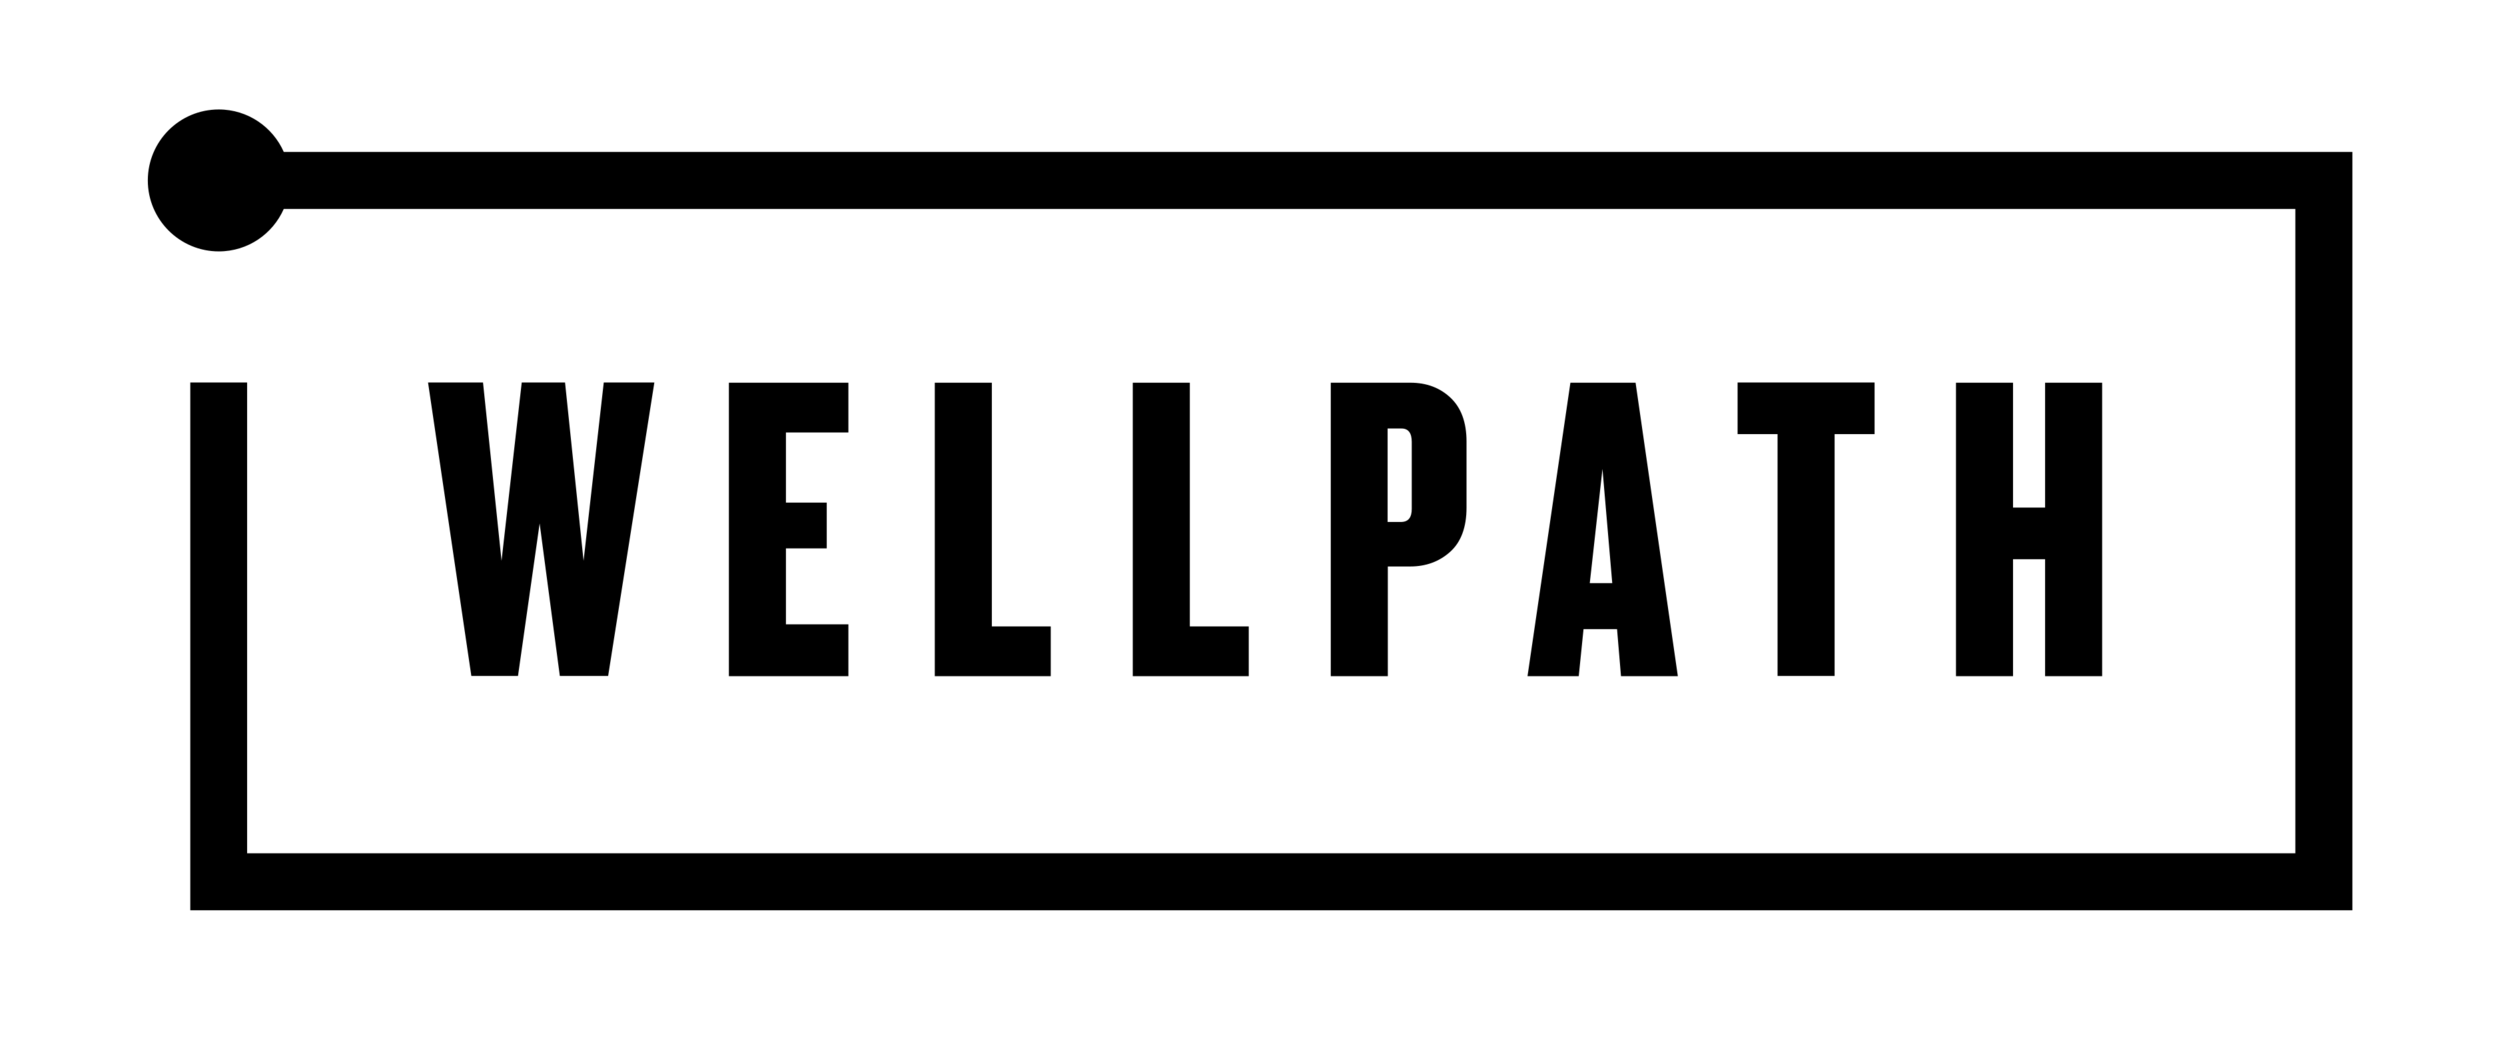 logo-rect-black (1).png